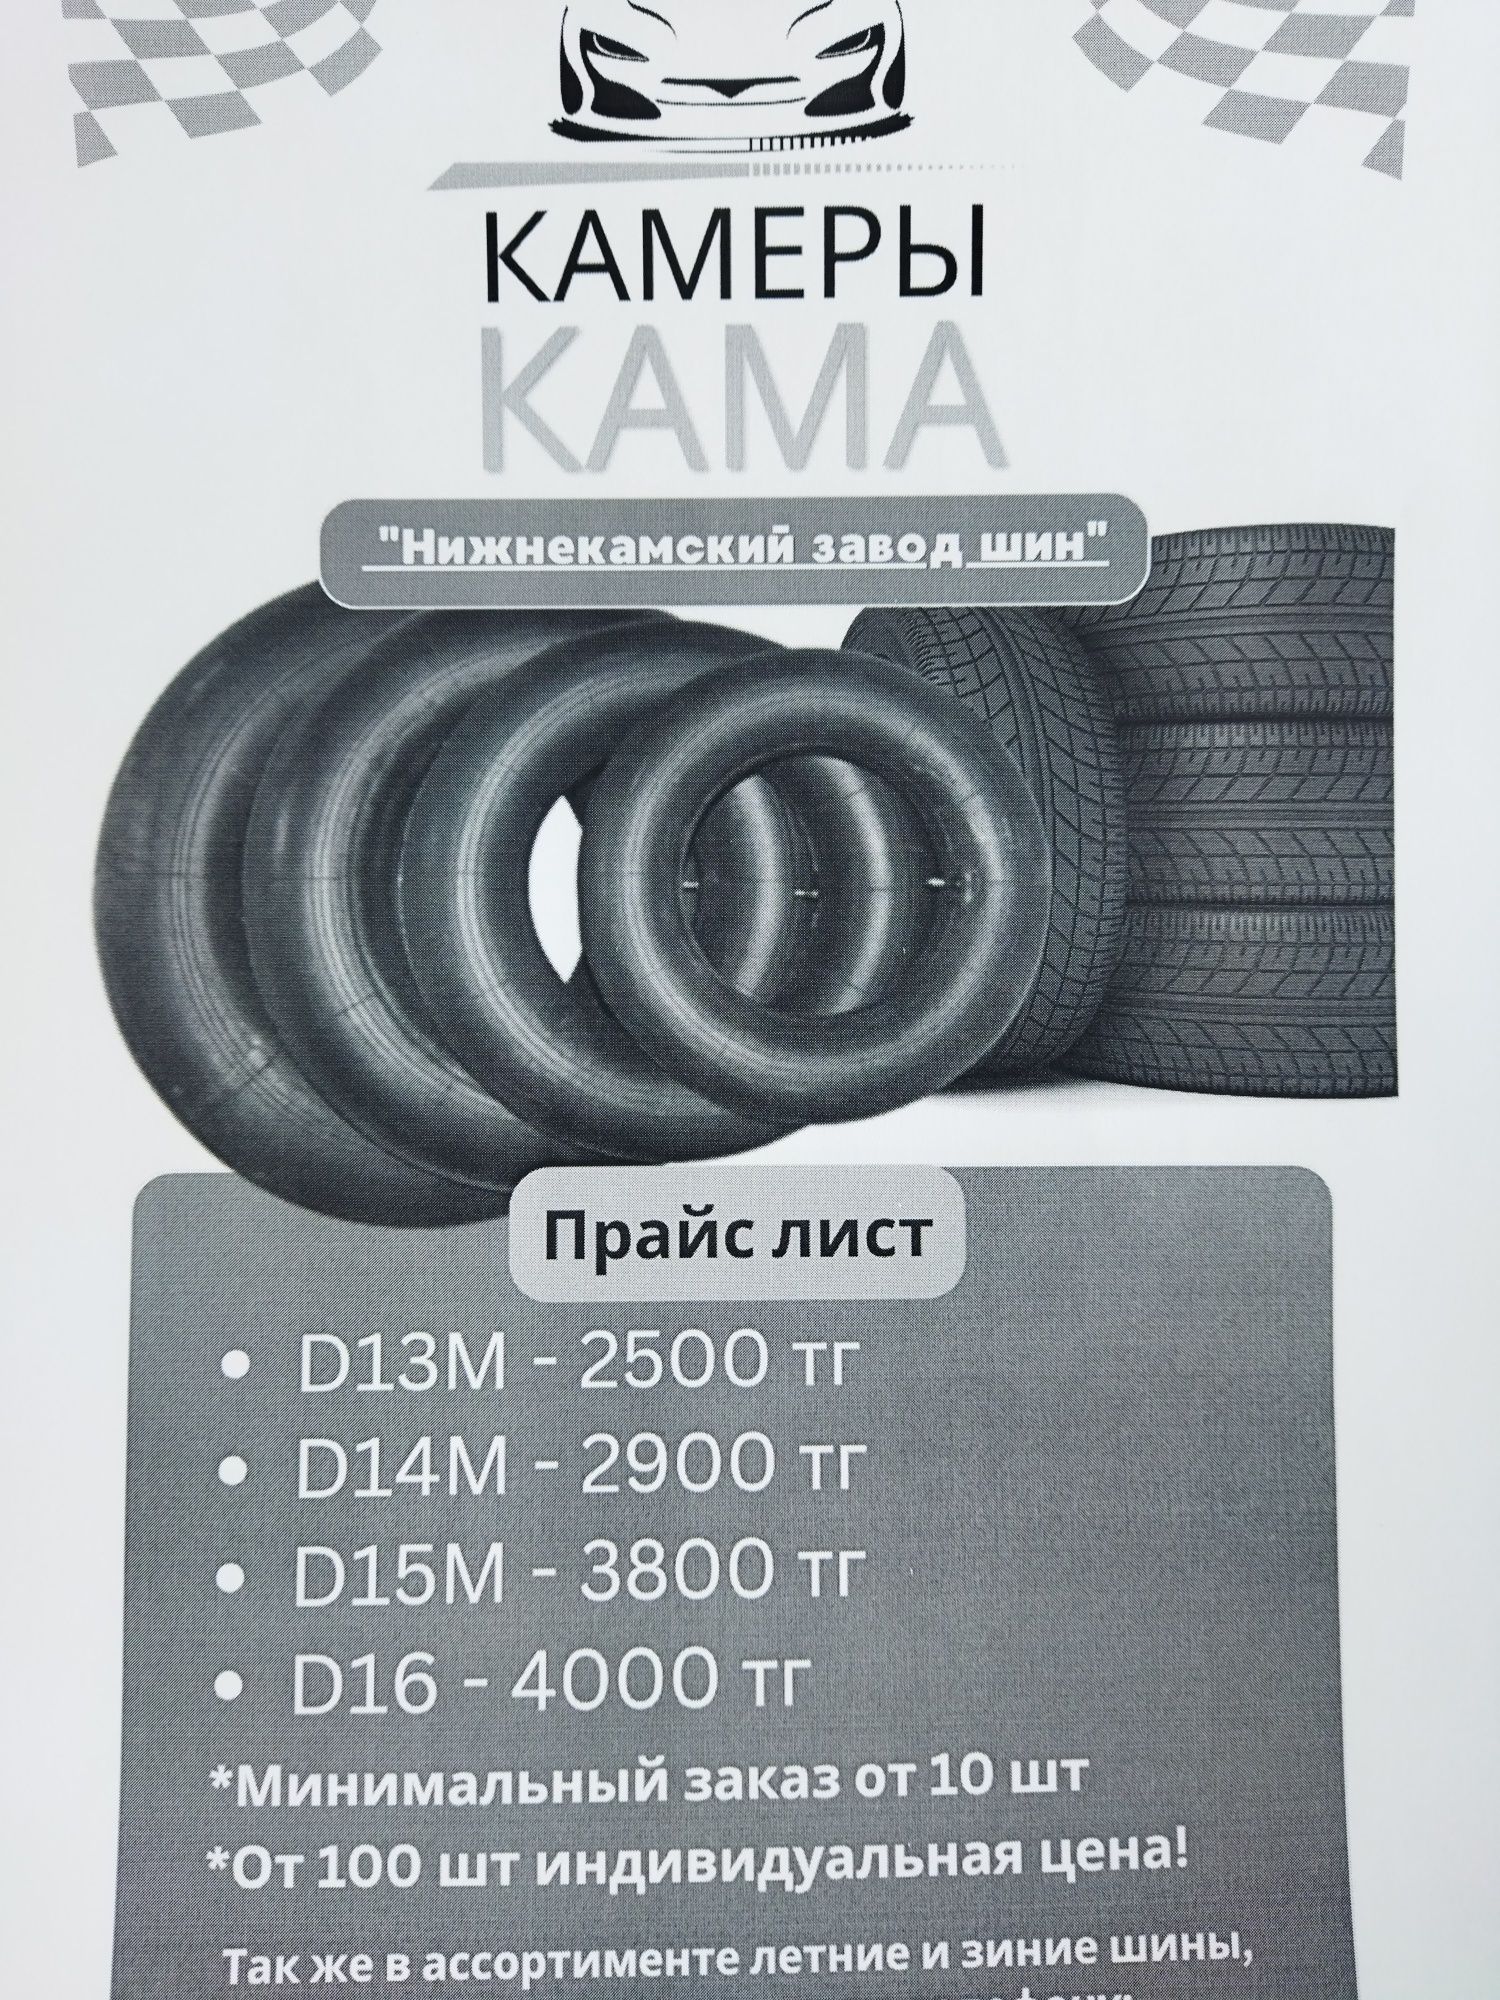 Камера для шин ОПТОМ Кама (Россия)УК-М r13;r14;r15;r16 широкие